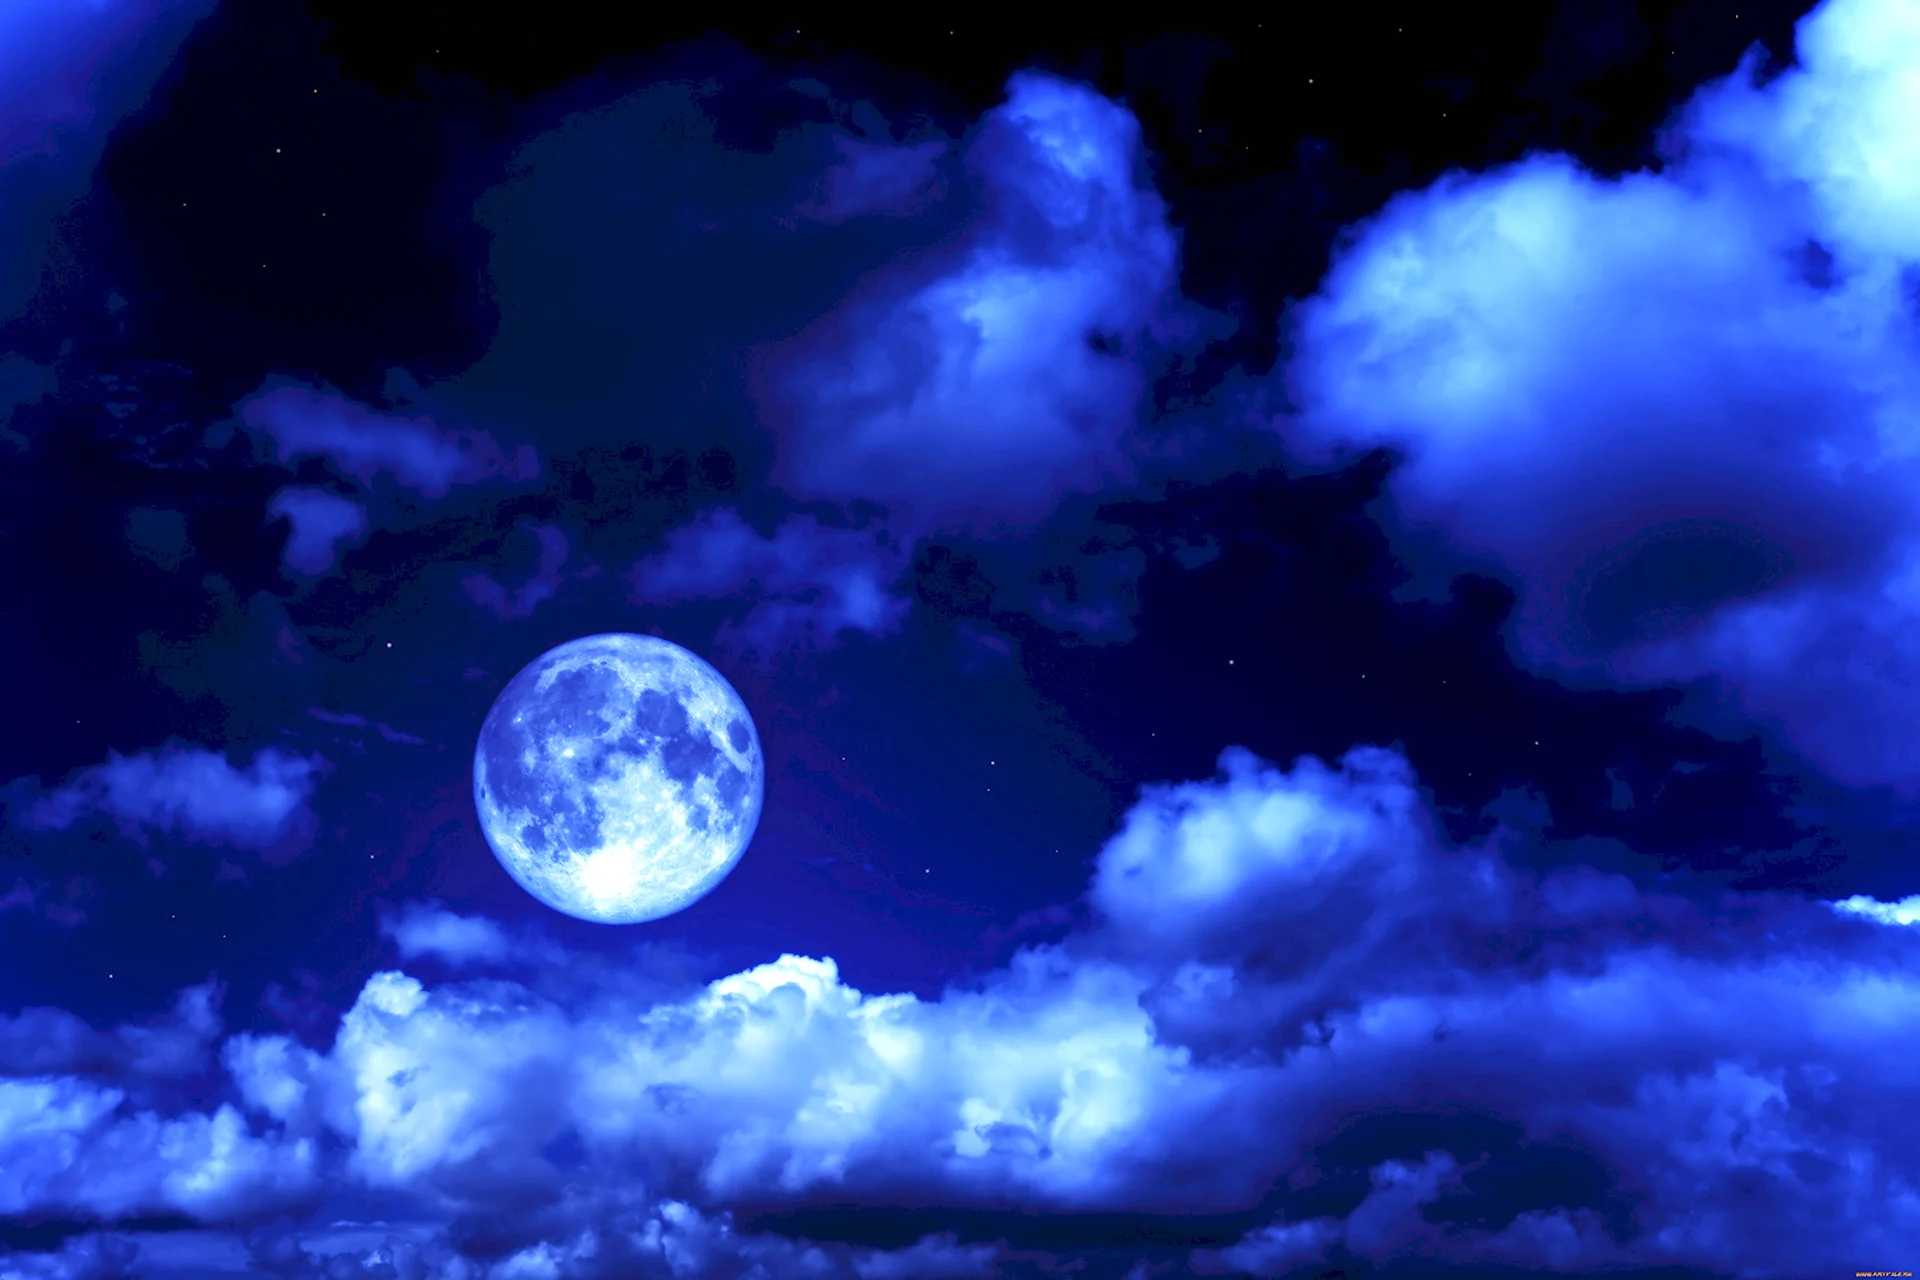 Лунное небо